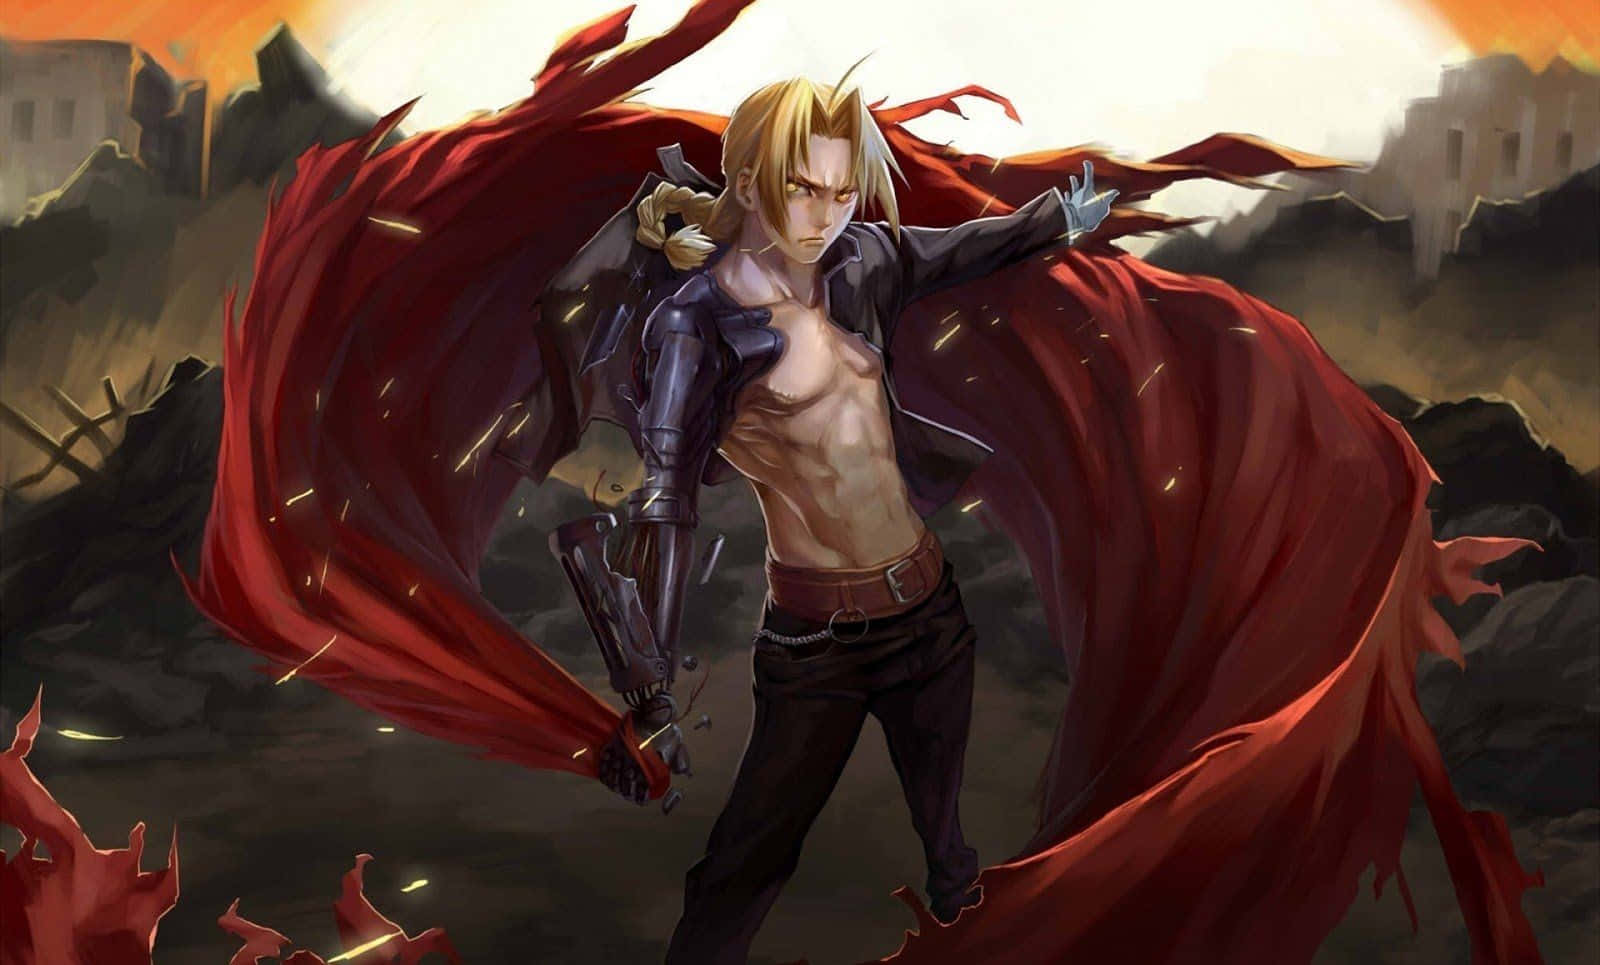 Caption: Edward Elric - The Fullmetal Alchemist Background